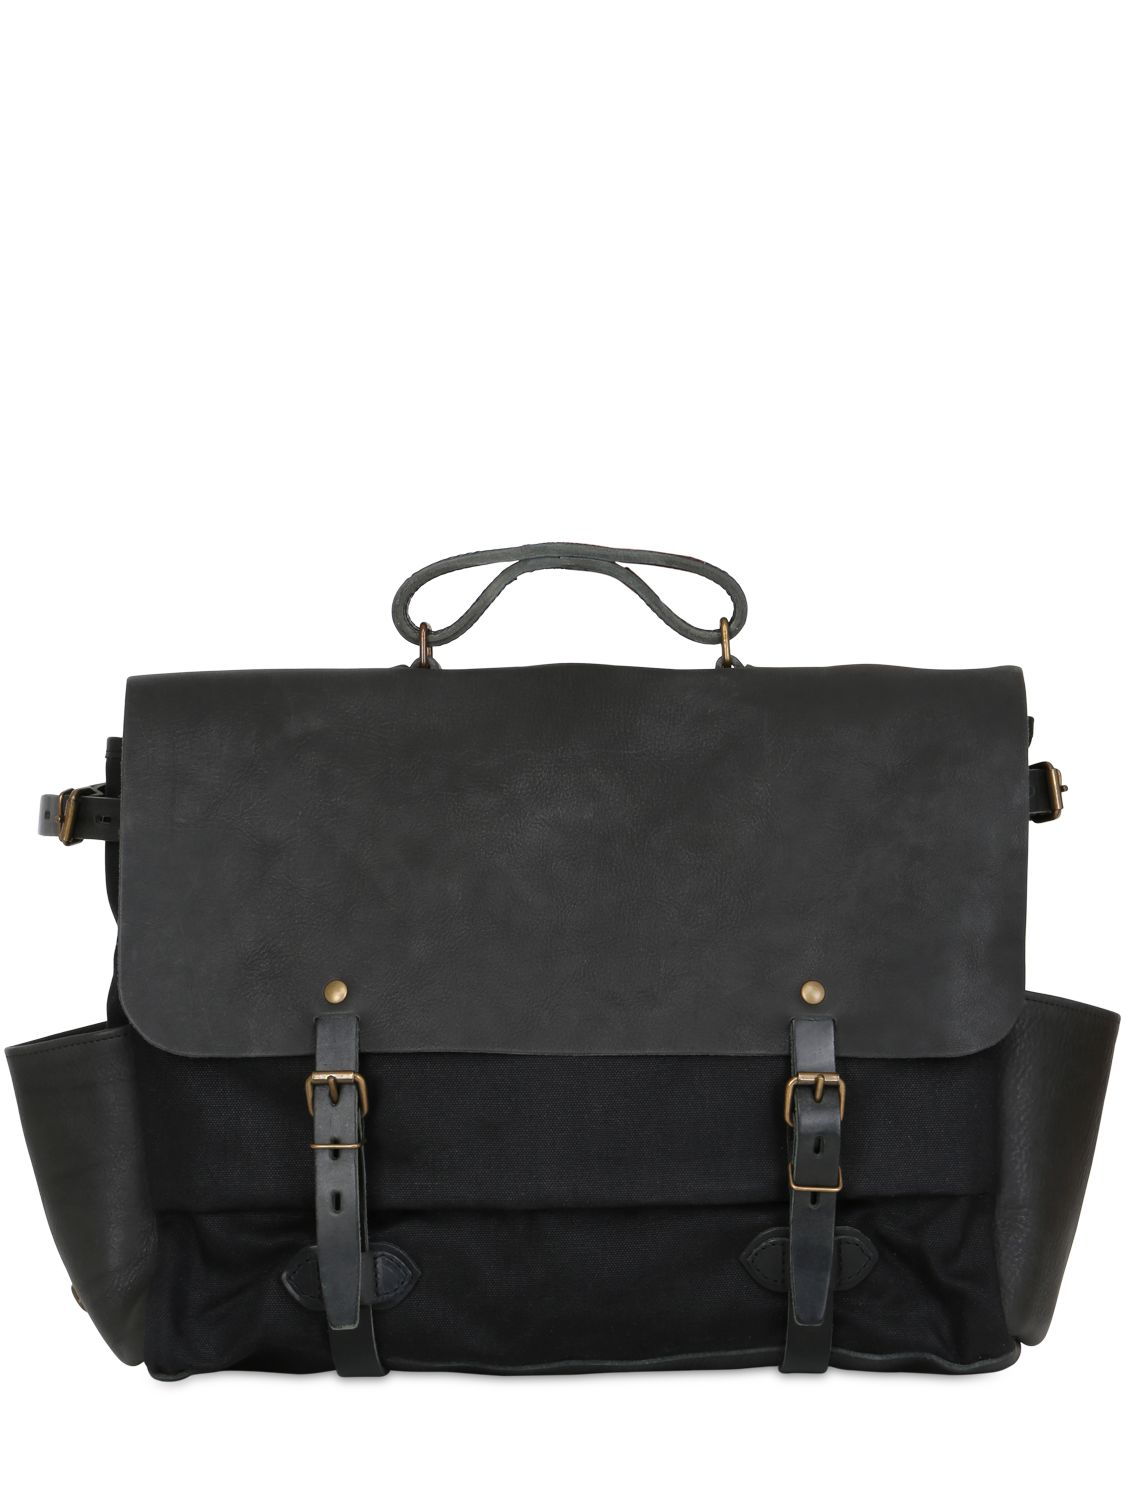 Lyst - Bleu De Chauffe Irving Handmade Leather Business Bag in Black for Men